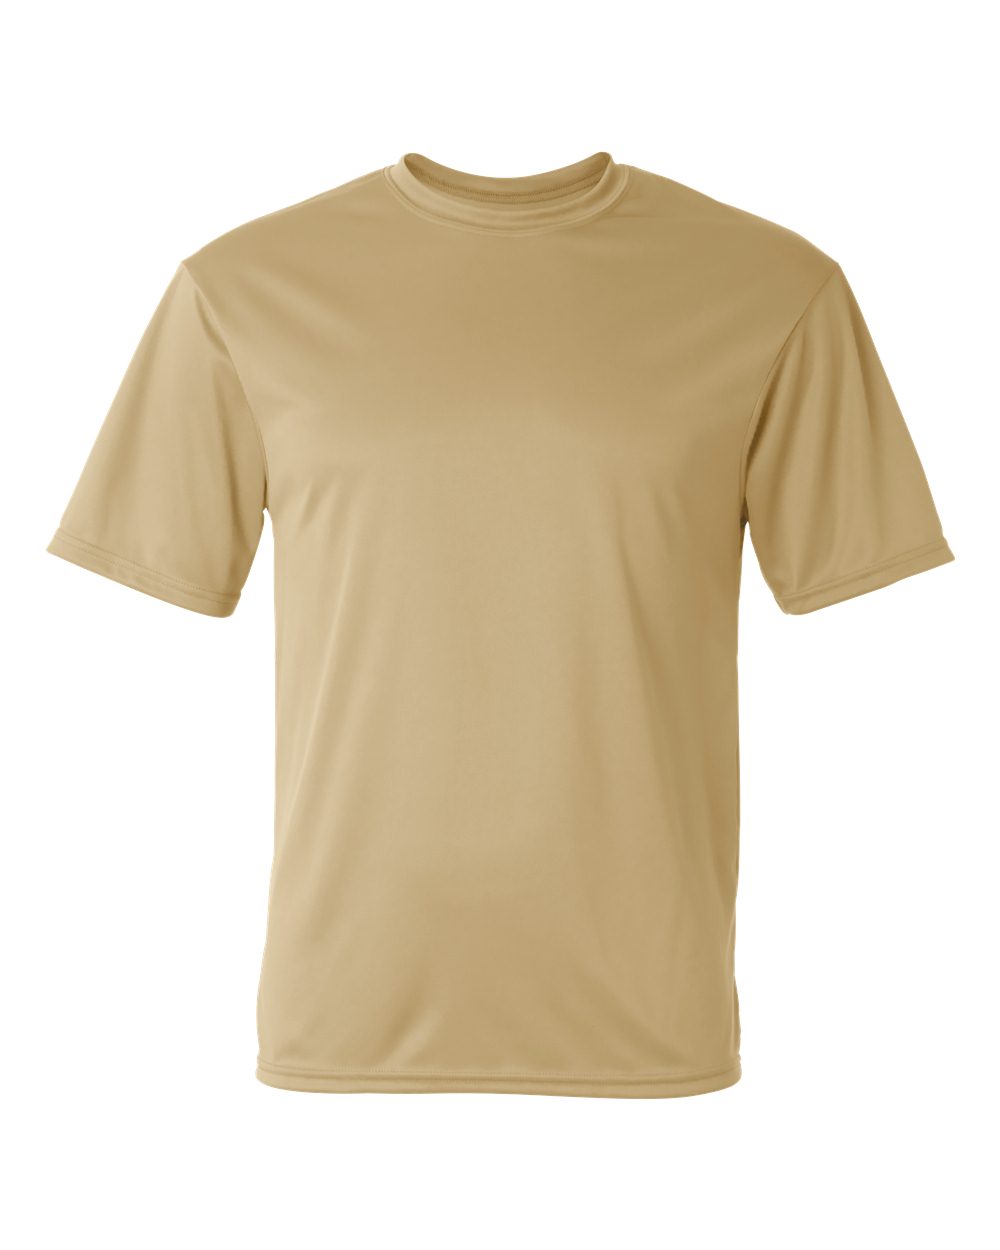 C2 Sport - Performance Unisex T-Shirt - 5100